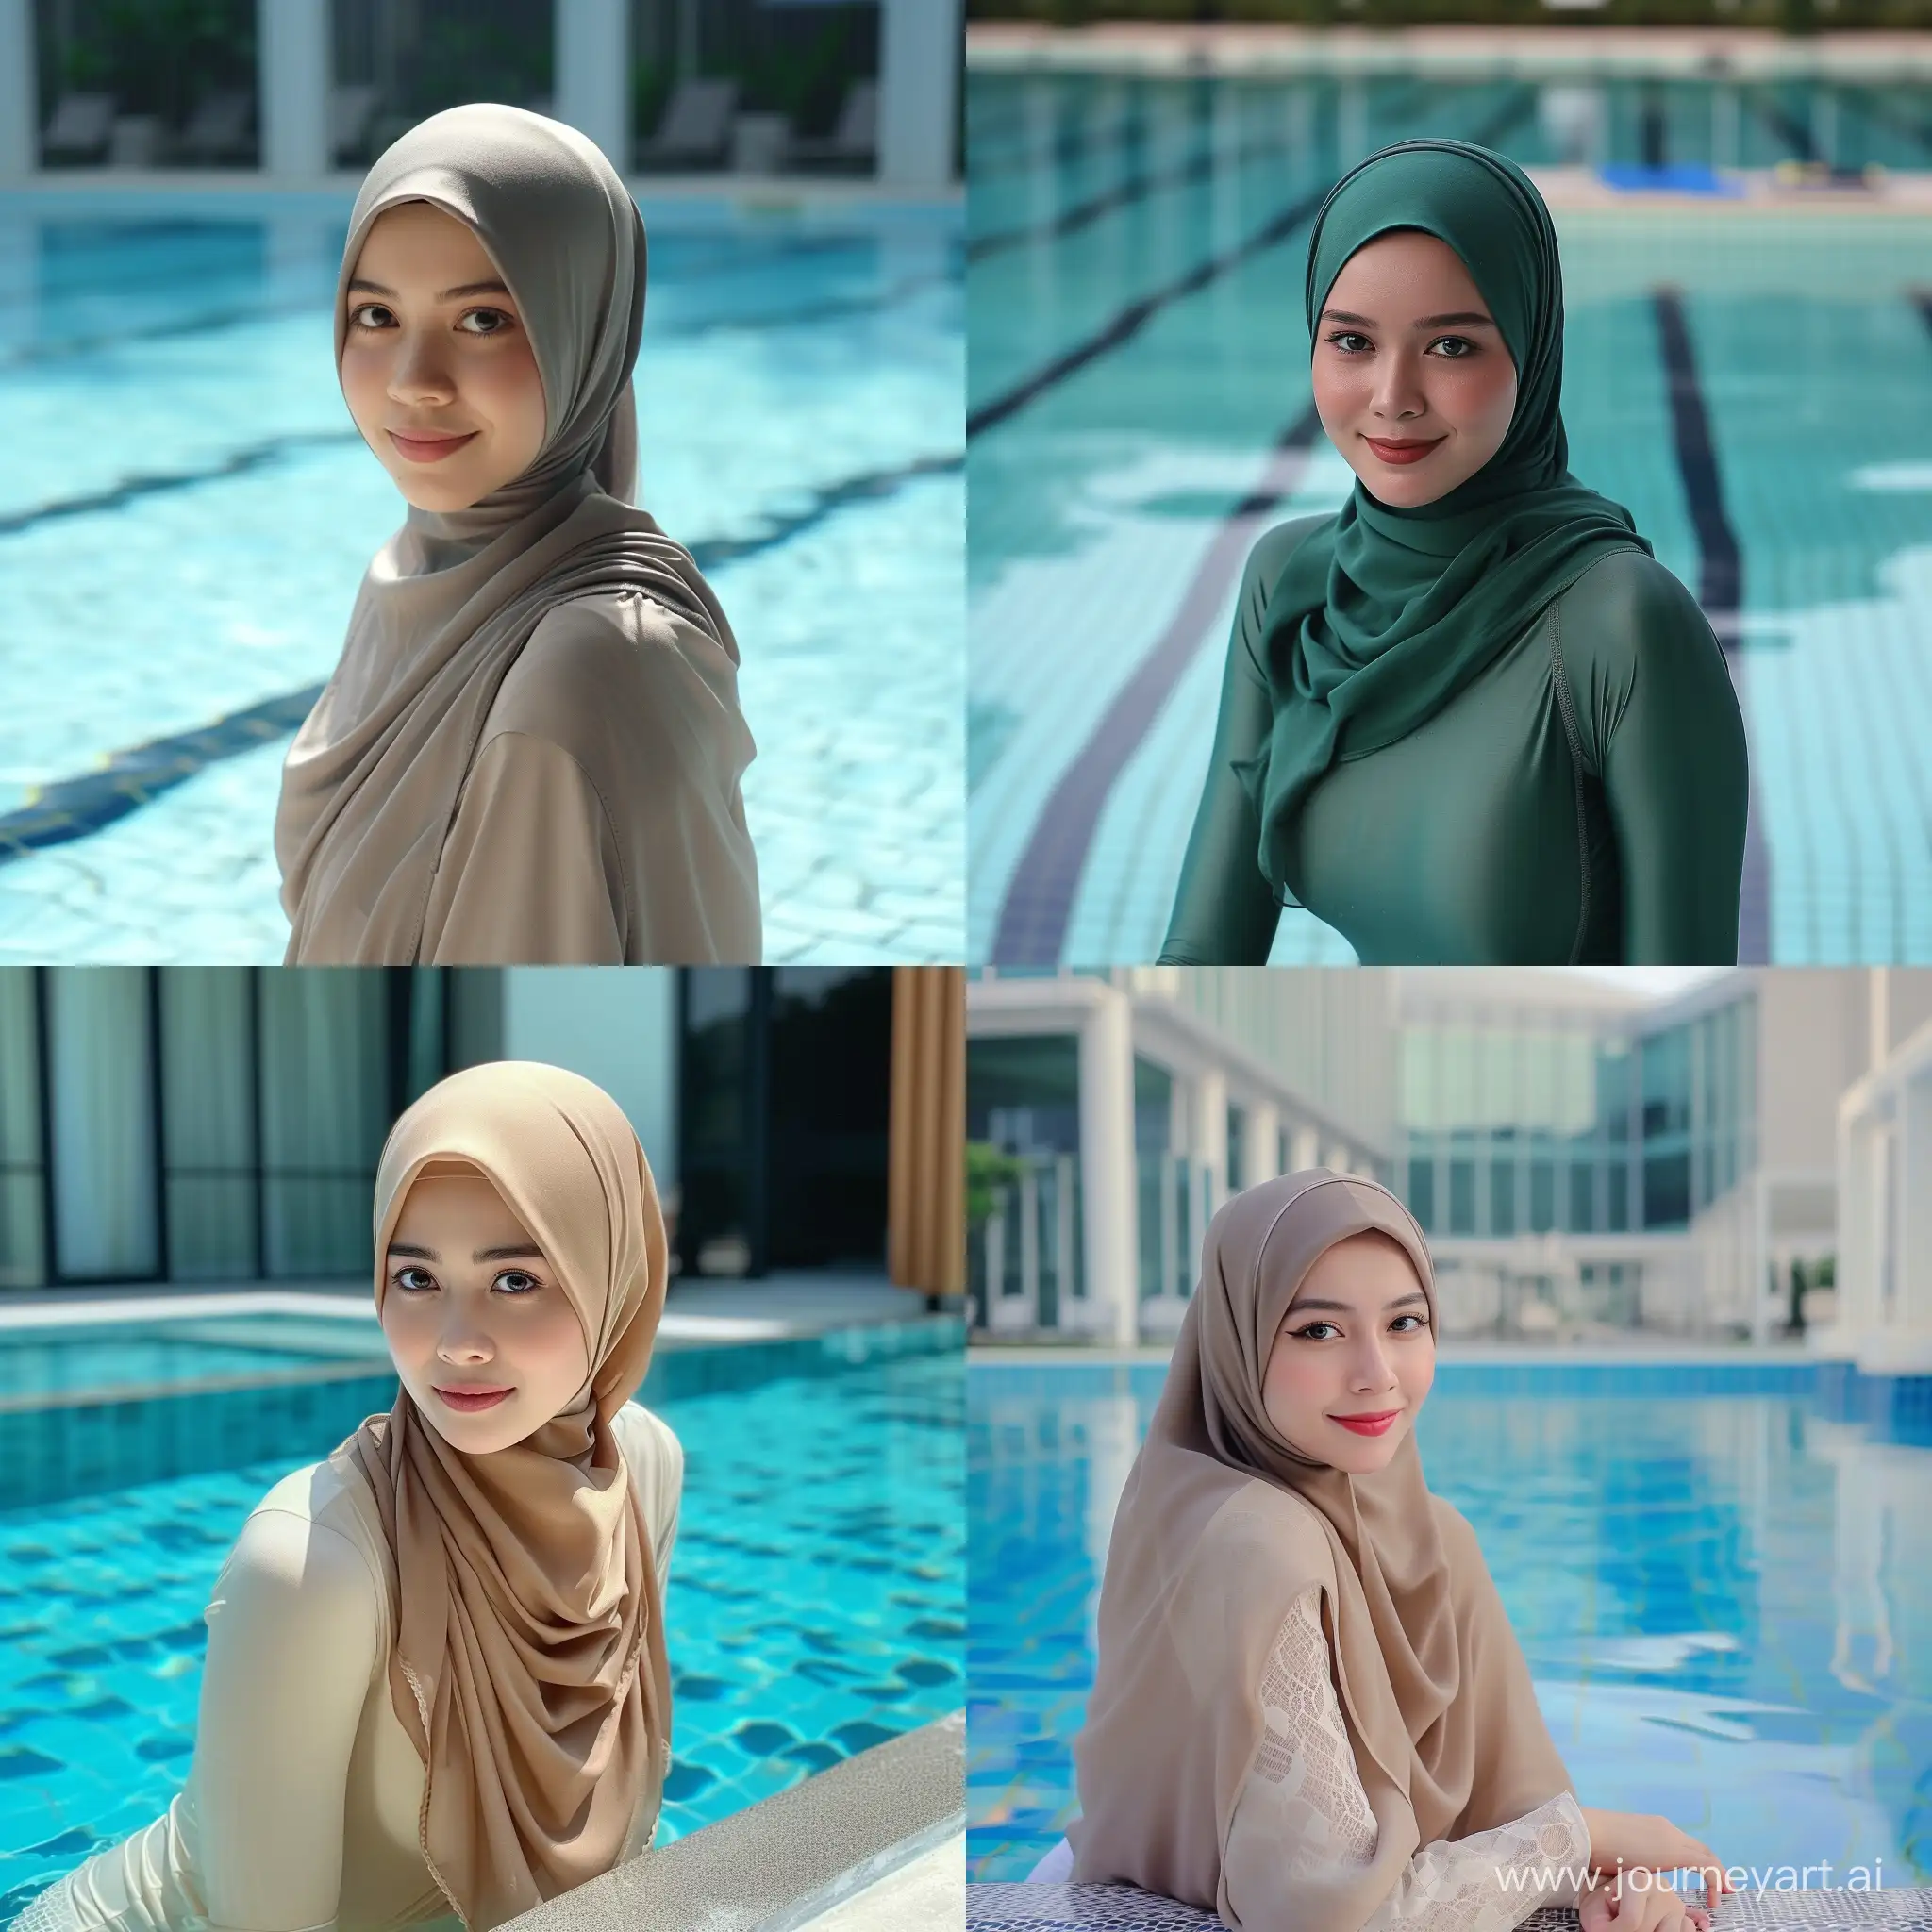 Stunning-Indonesian-Hijab-Woman-Enjoying-Poolside-Serenity